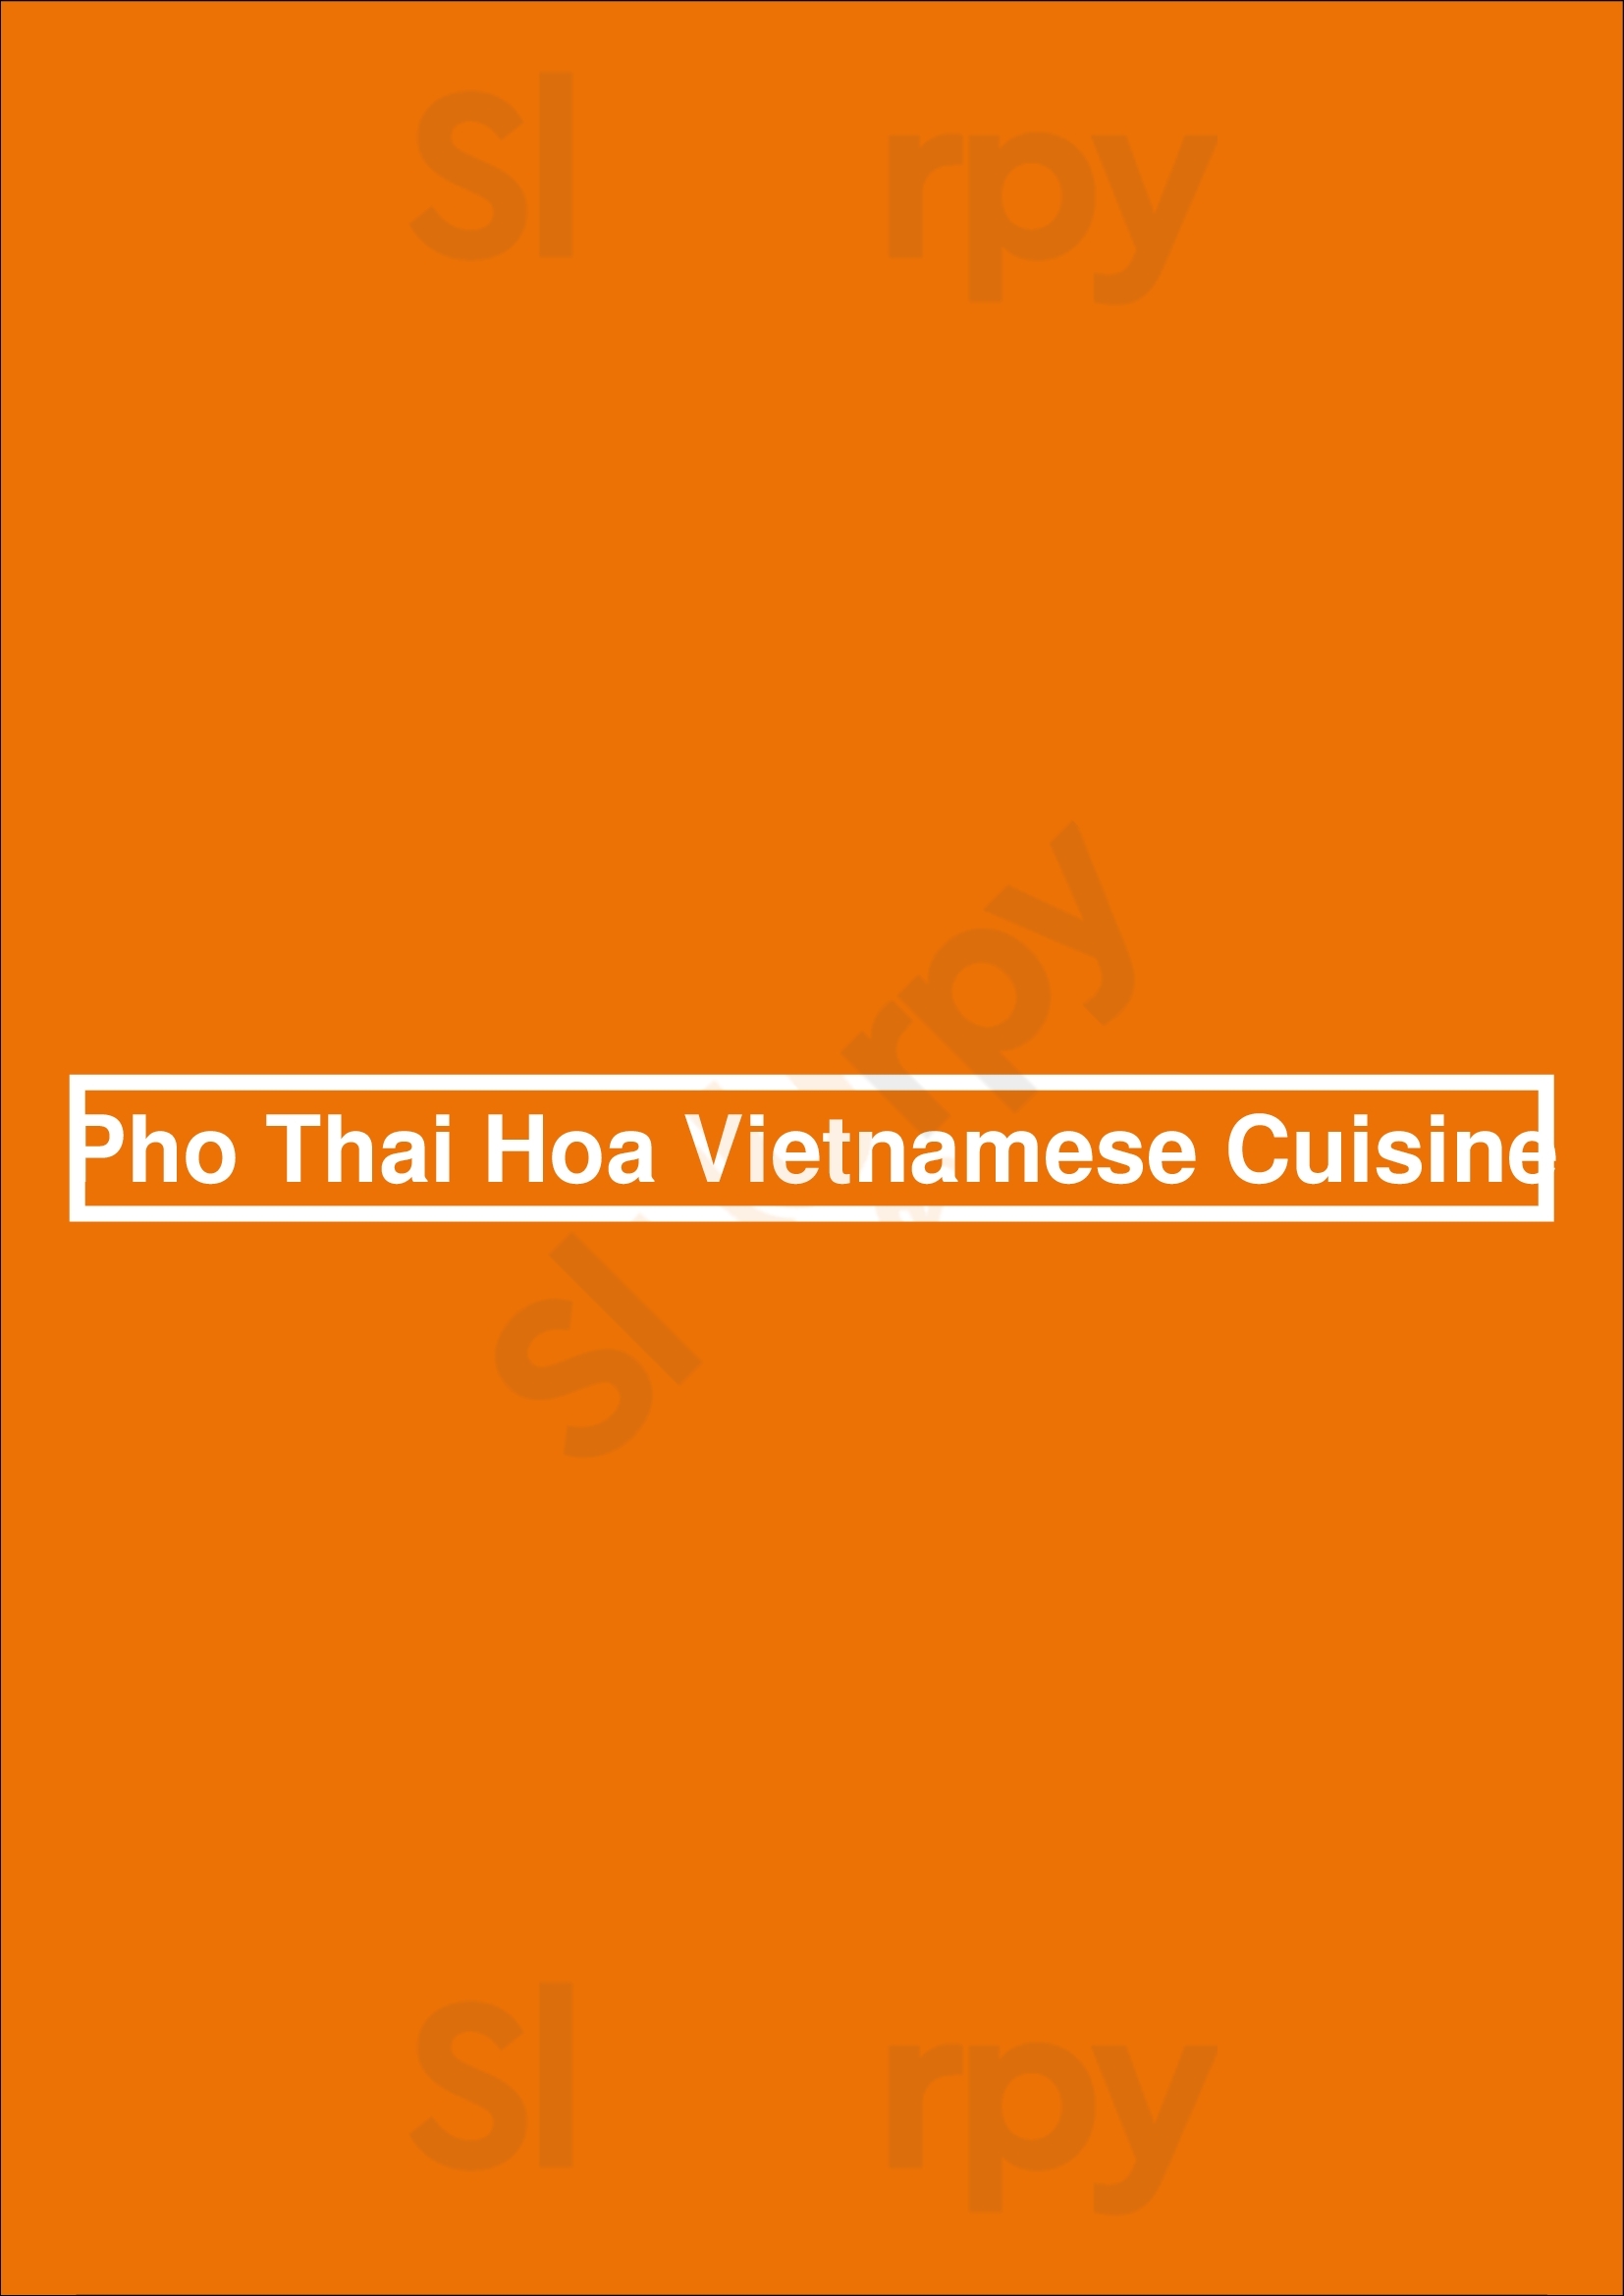 Pho Thai Hoa Vietnamese Cuisine Vancouver Menu - 1